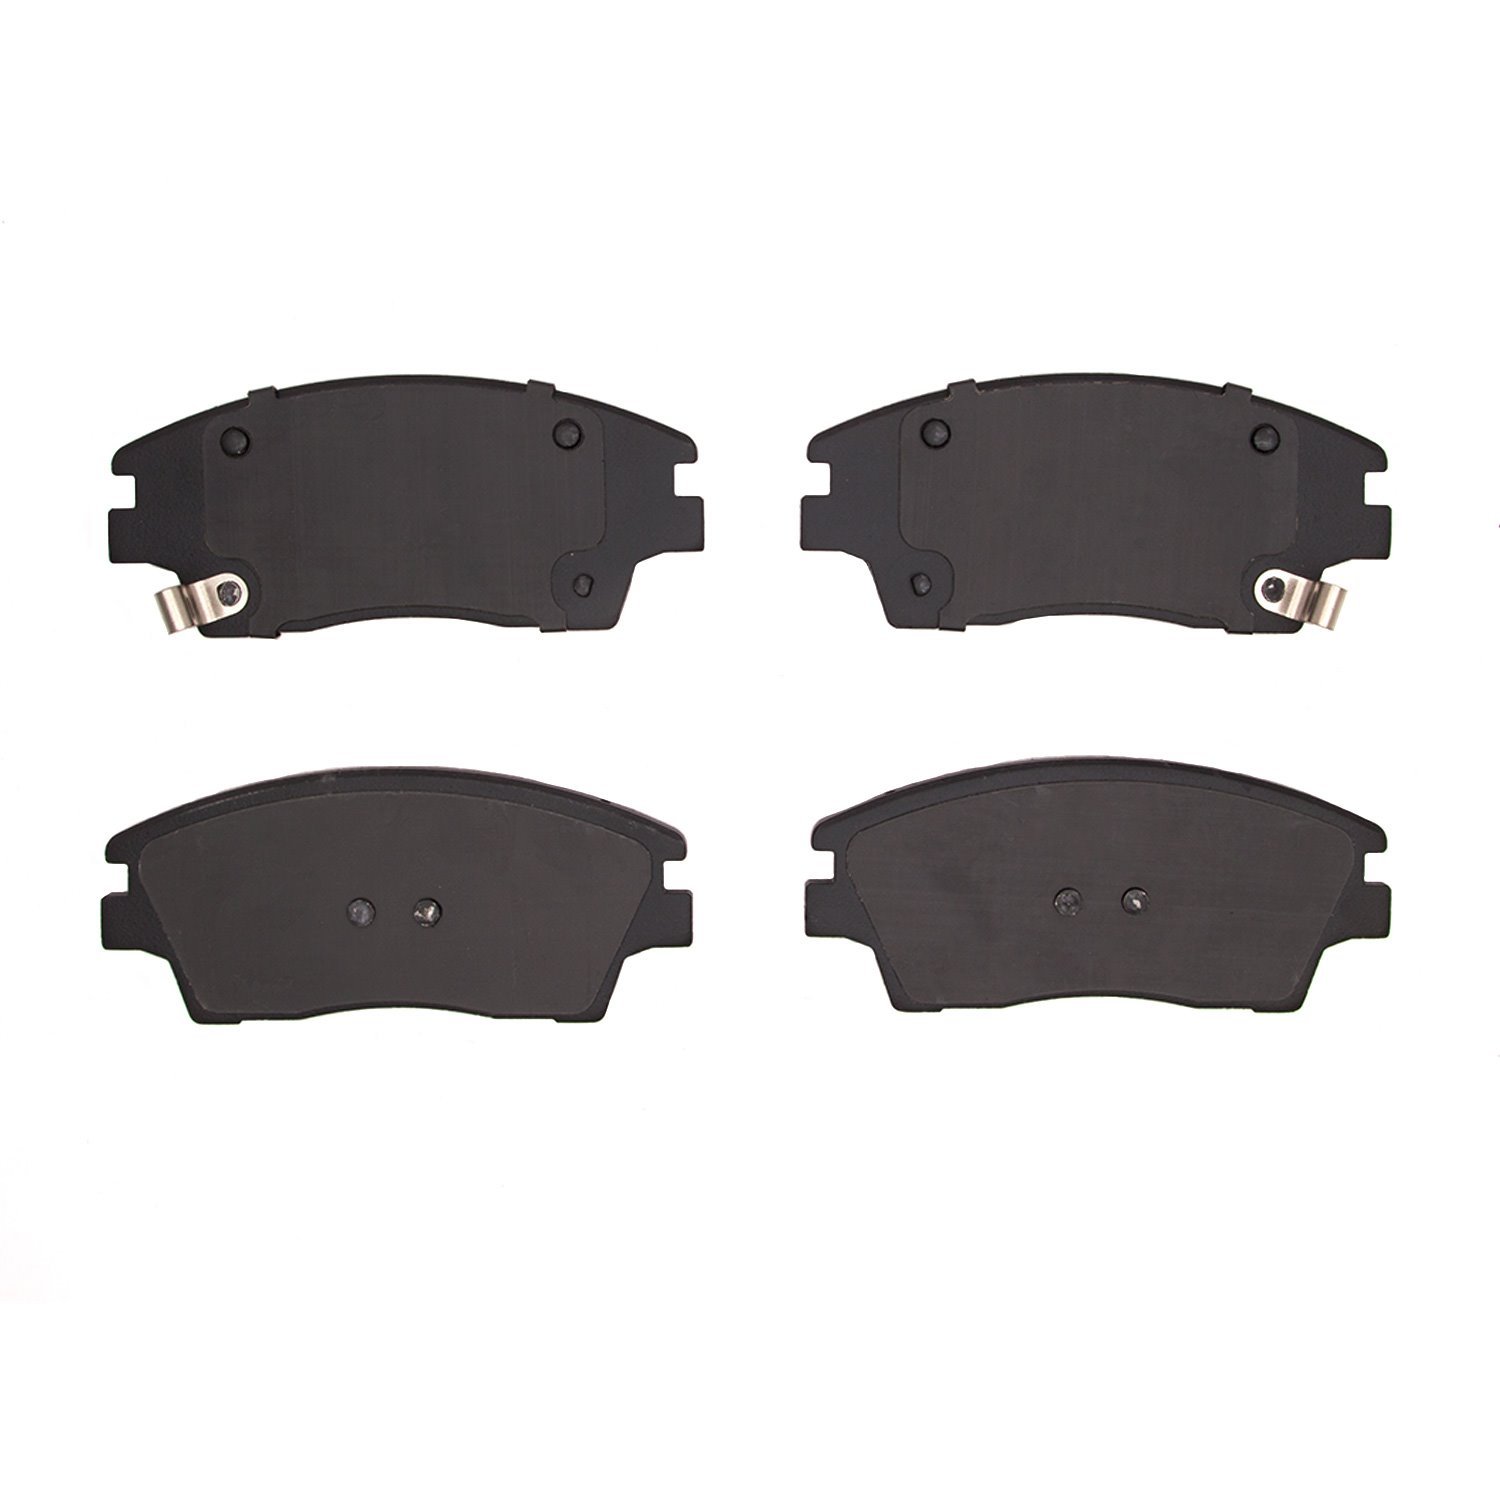 1551-1847-00 5000 Advanced Ceramic Brake Pads, Fits Select Kia/Hyundai/Genesis, Position: Front